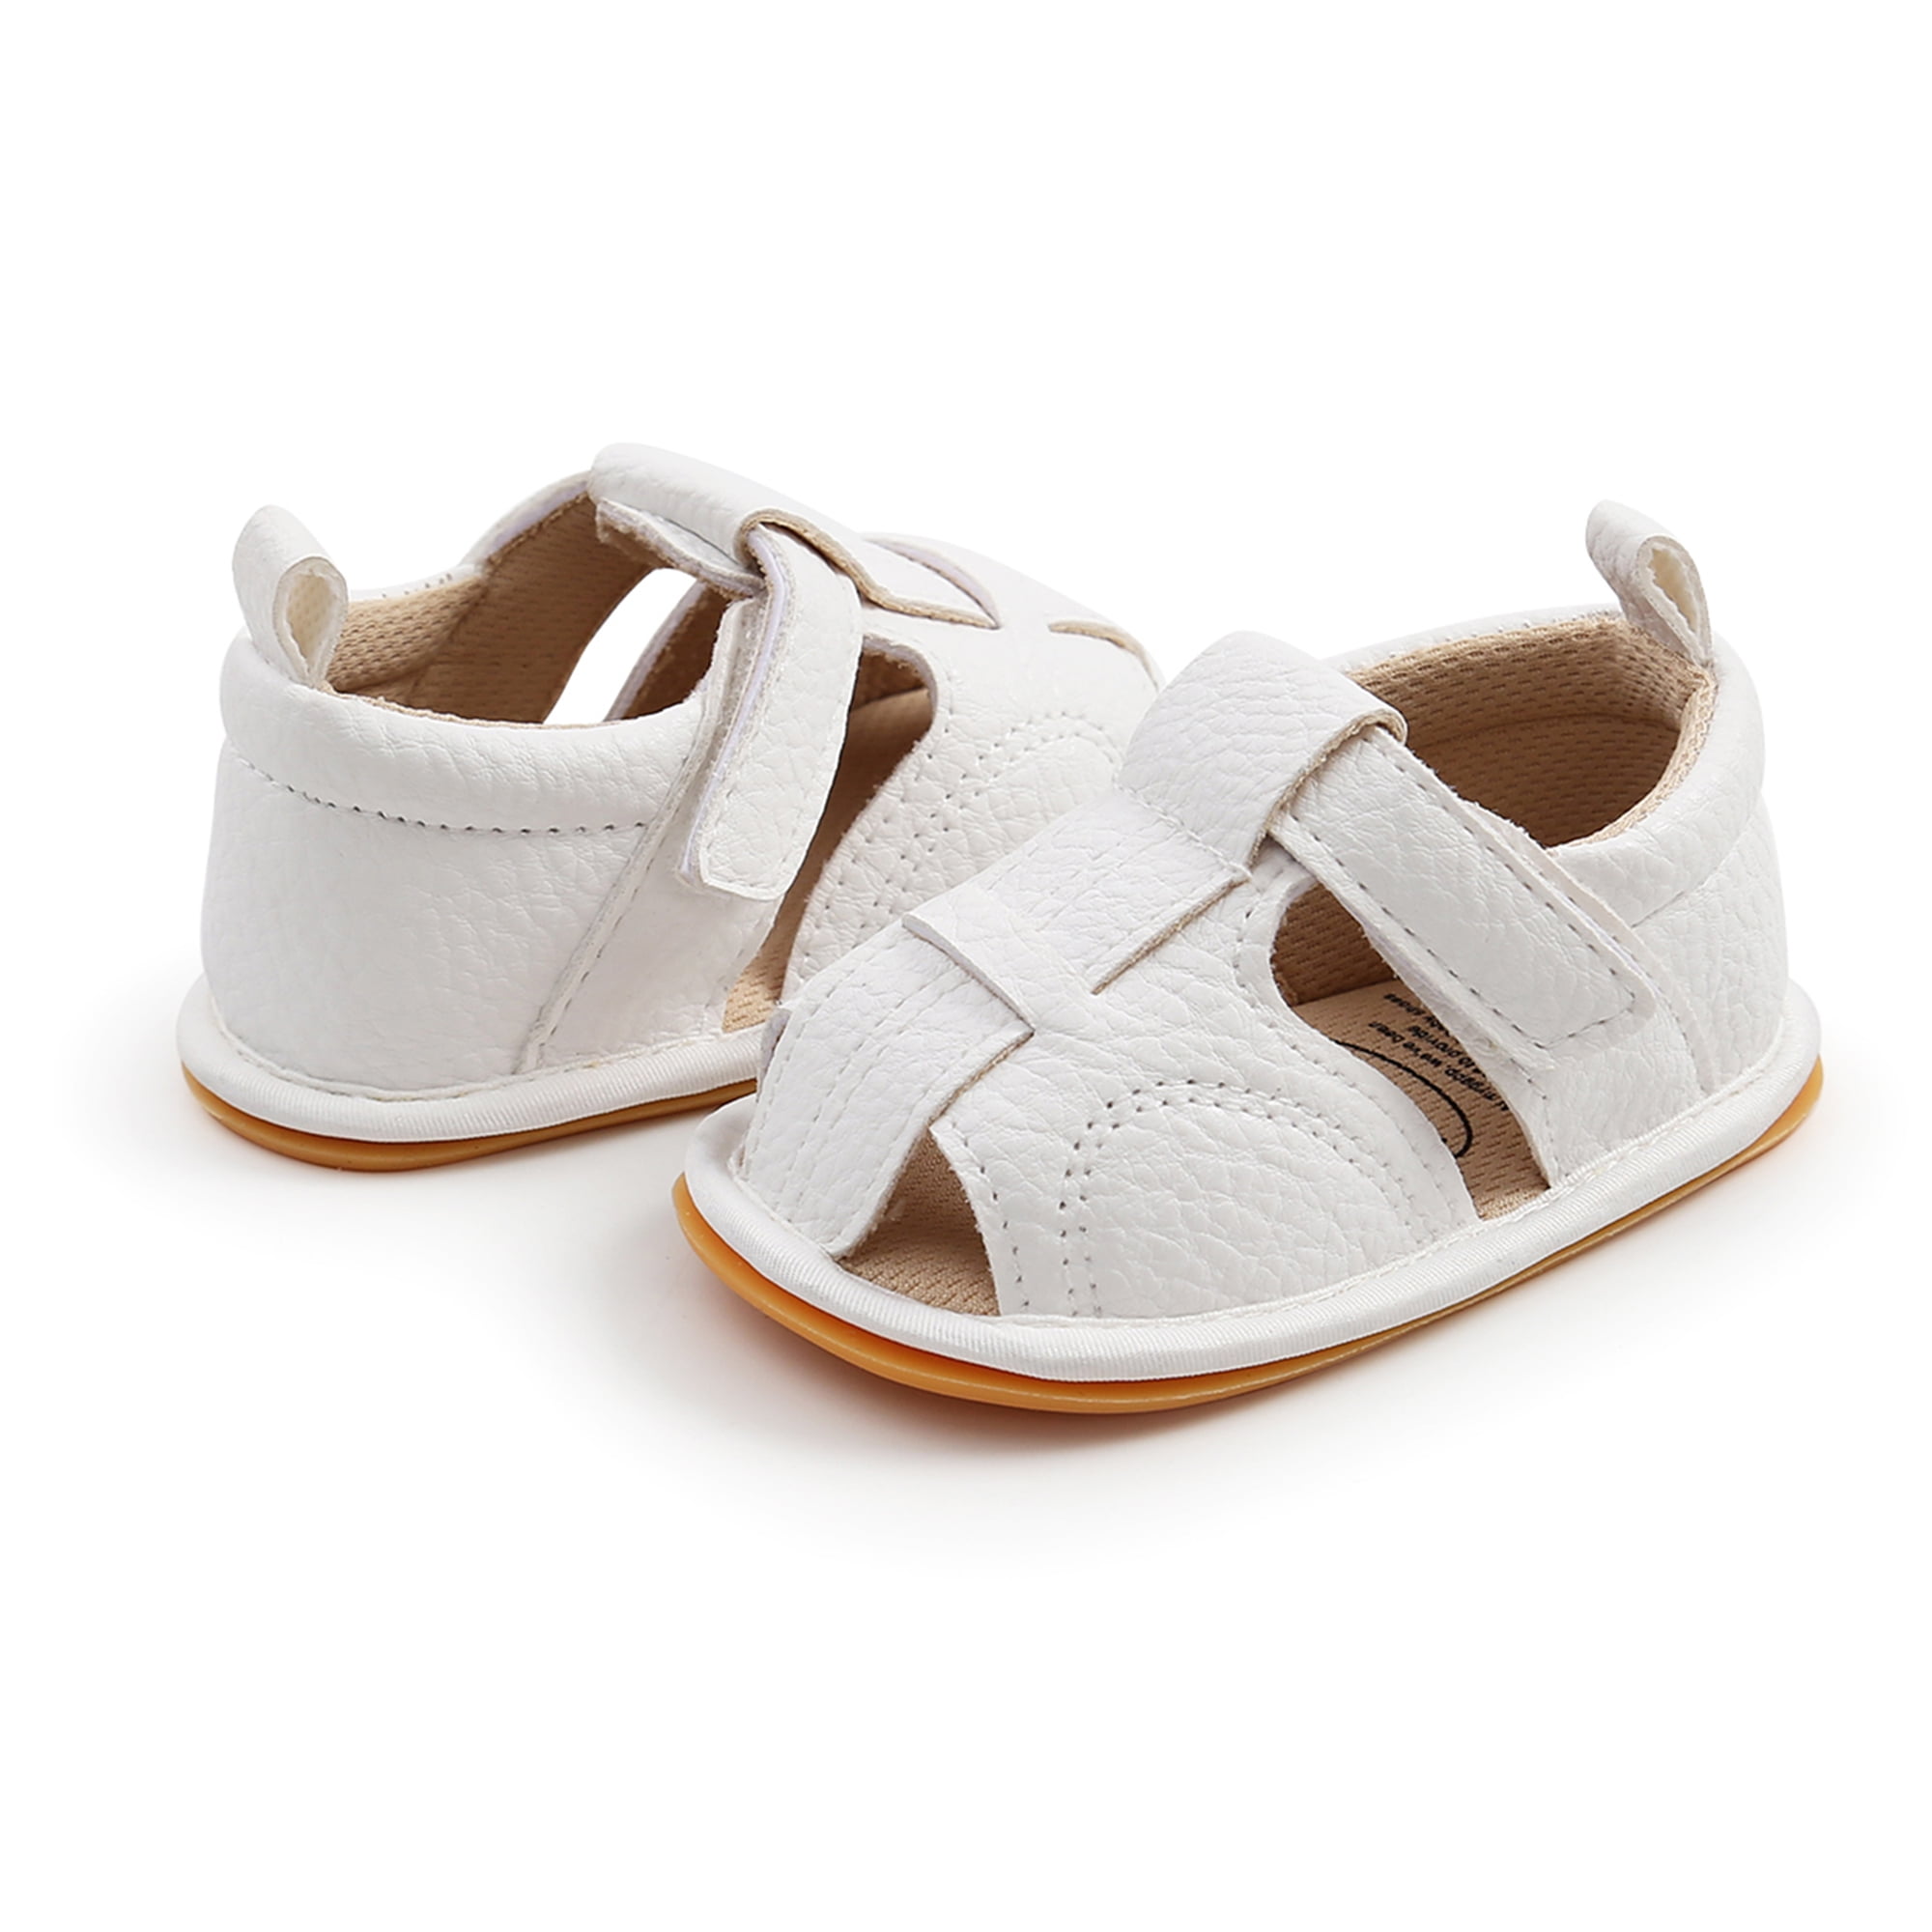 Infant Toddler Baby Kids Girl Boy Roman Shoes Sandals Prewalker Soft Sole Shoes 